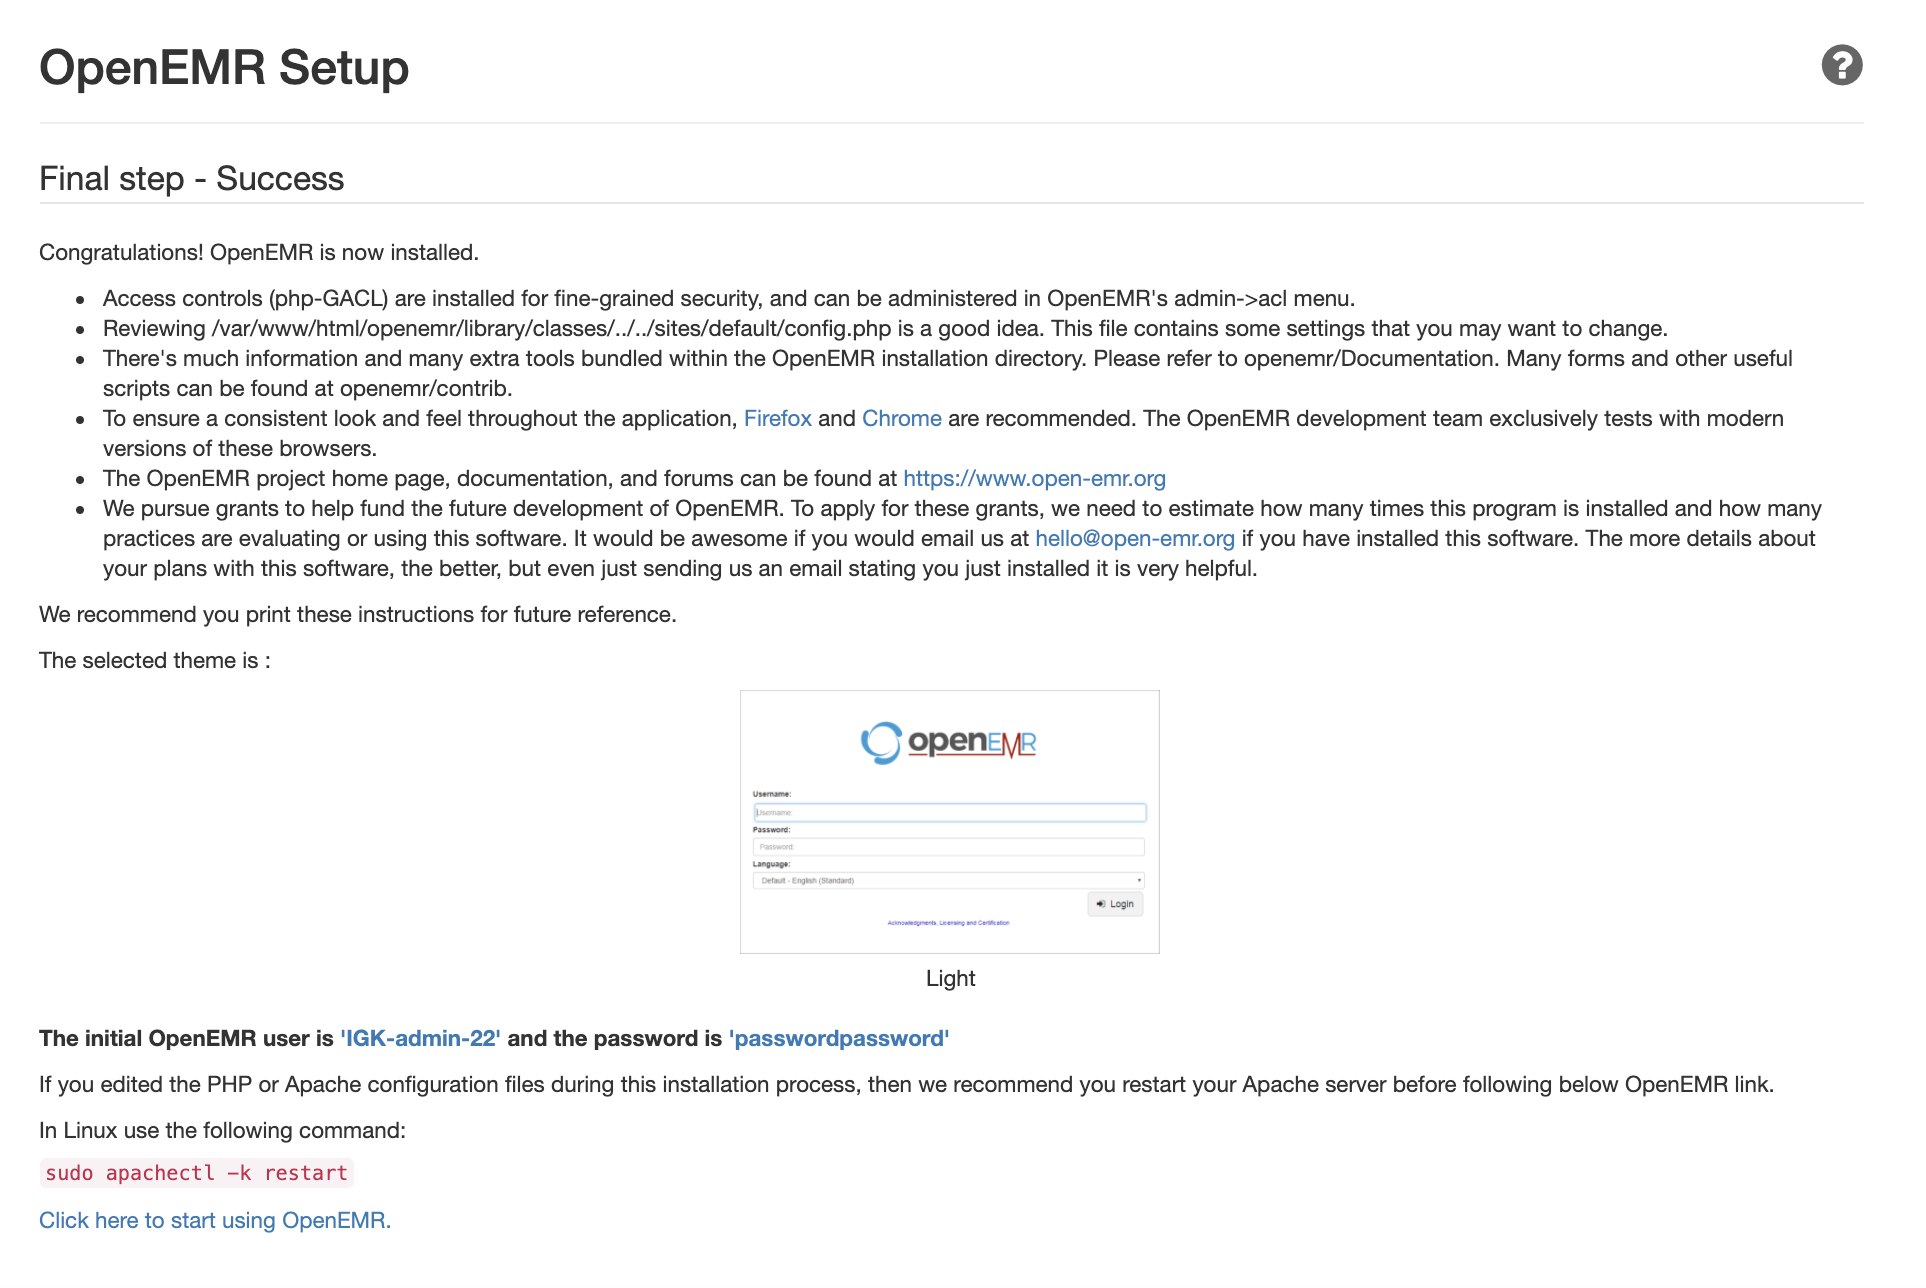 OpenEMR setup page — Final Step